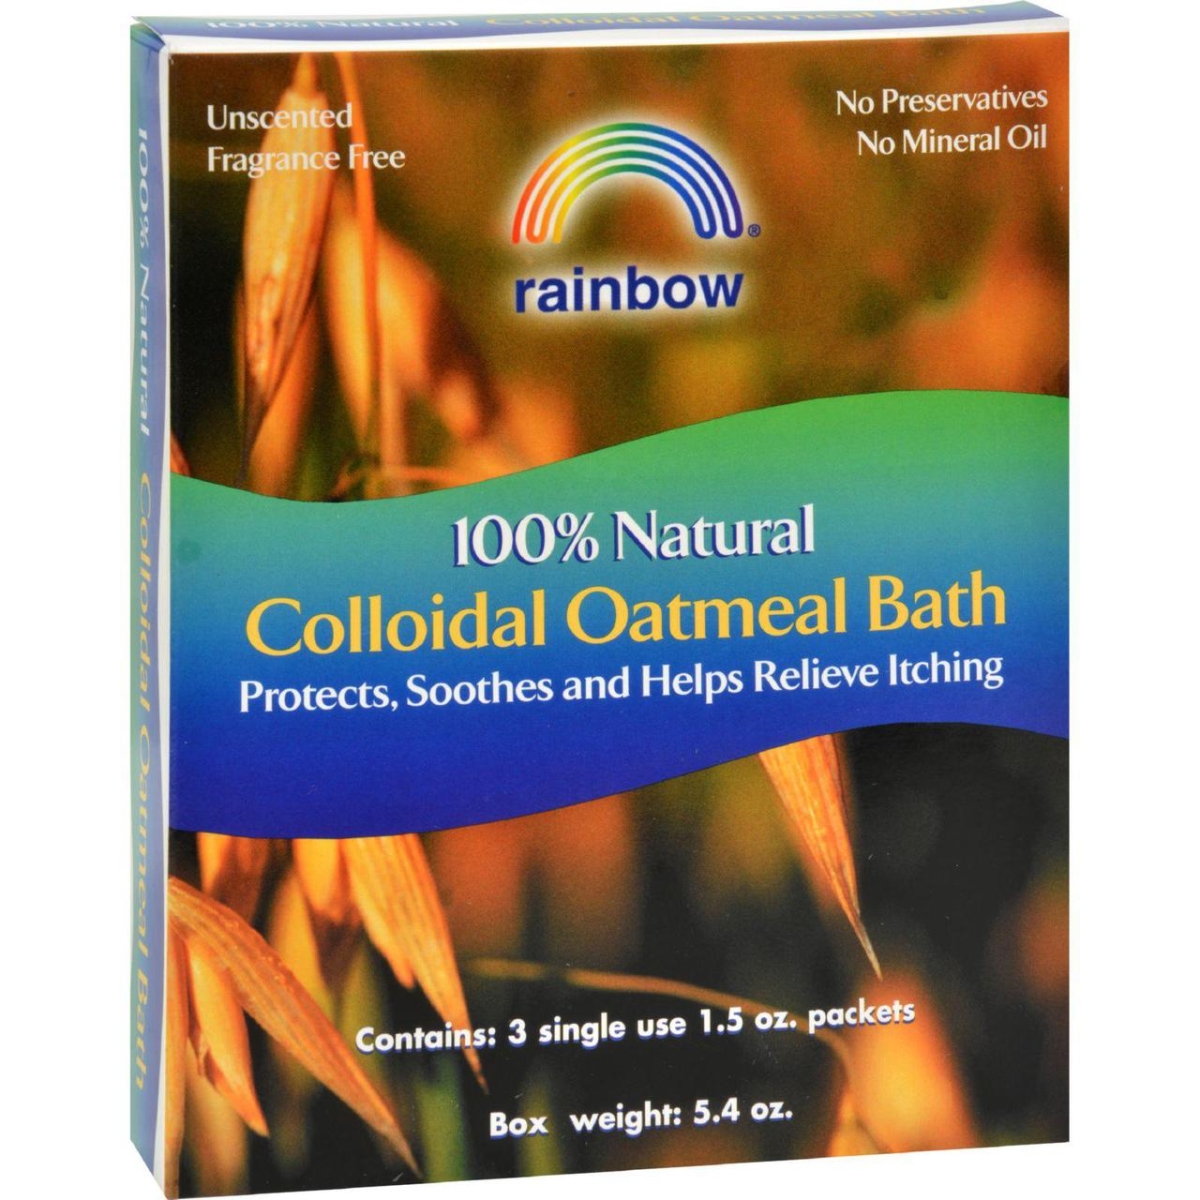 Hg0329862 1.5 Oz Colloidal Oatmeal Bath - Pack Of 3